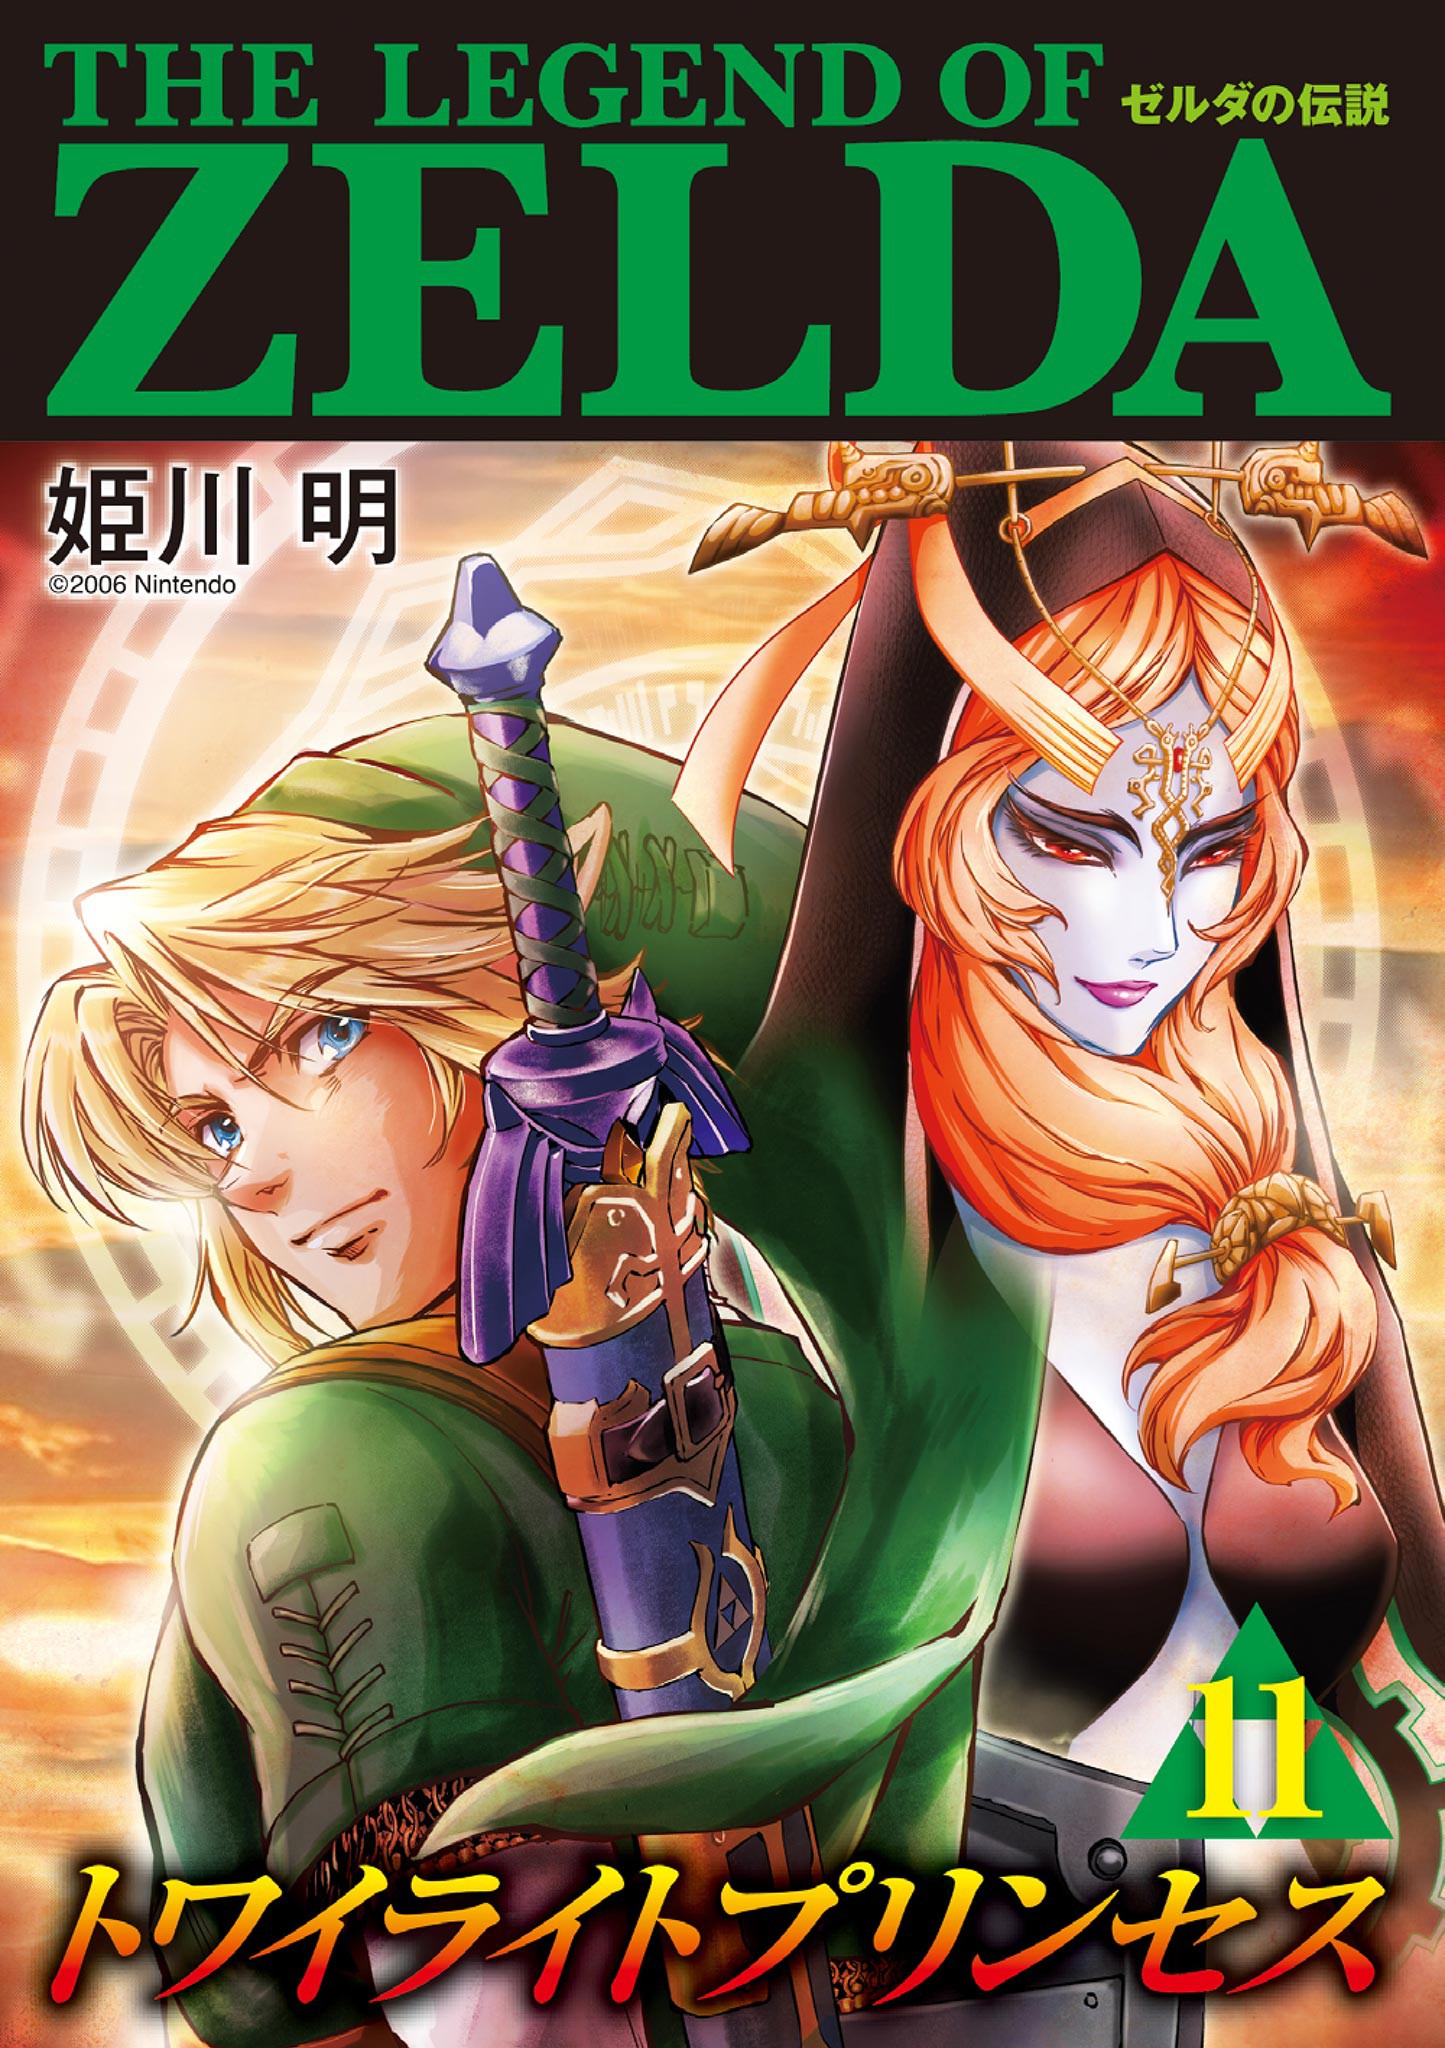 The Legend of Zelda: Twilight Princess - MangaDex